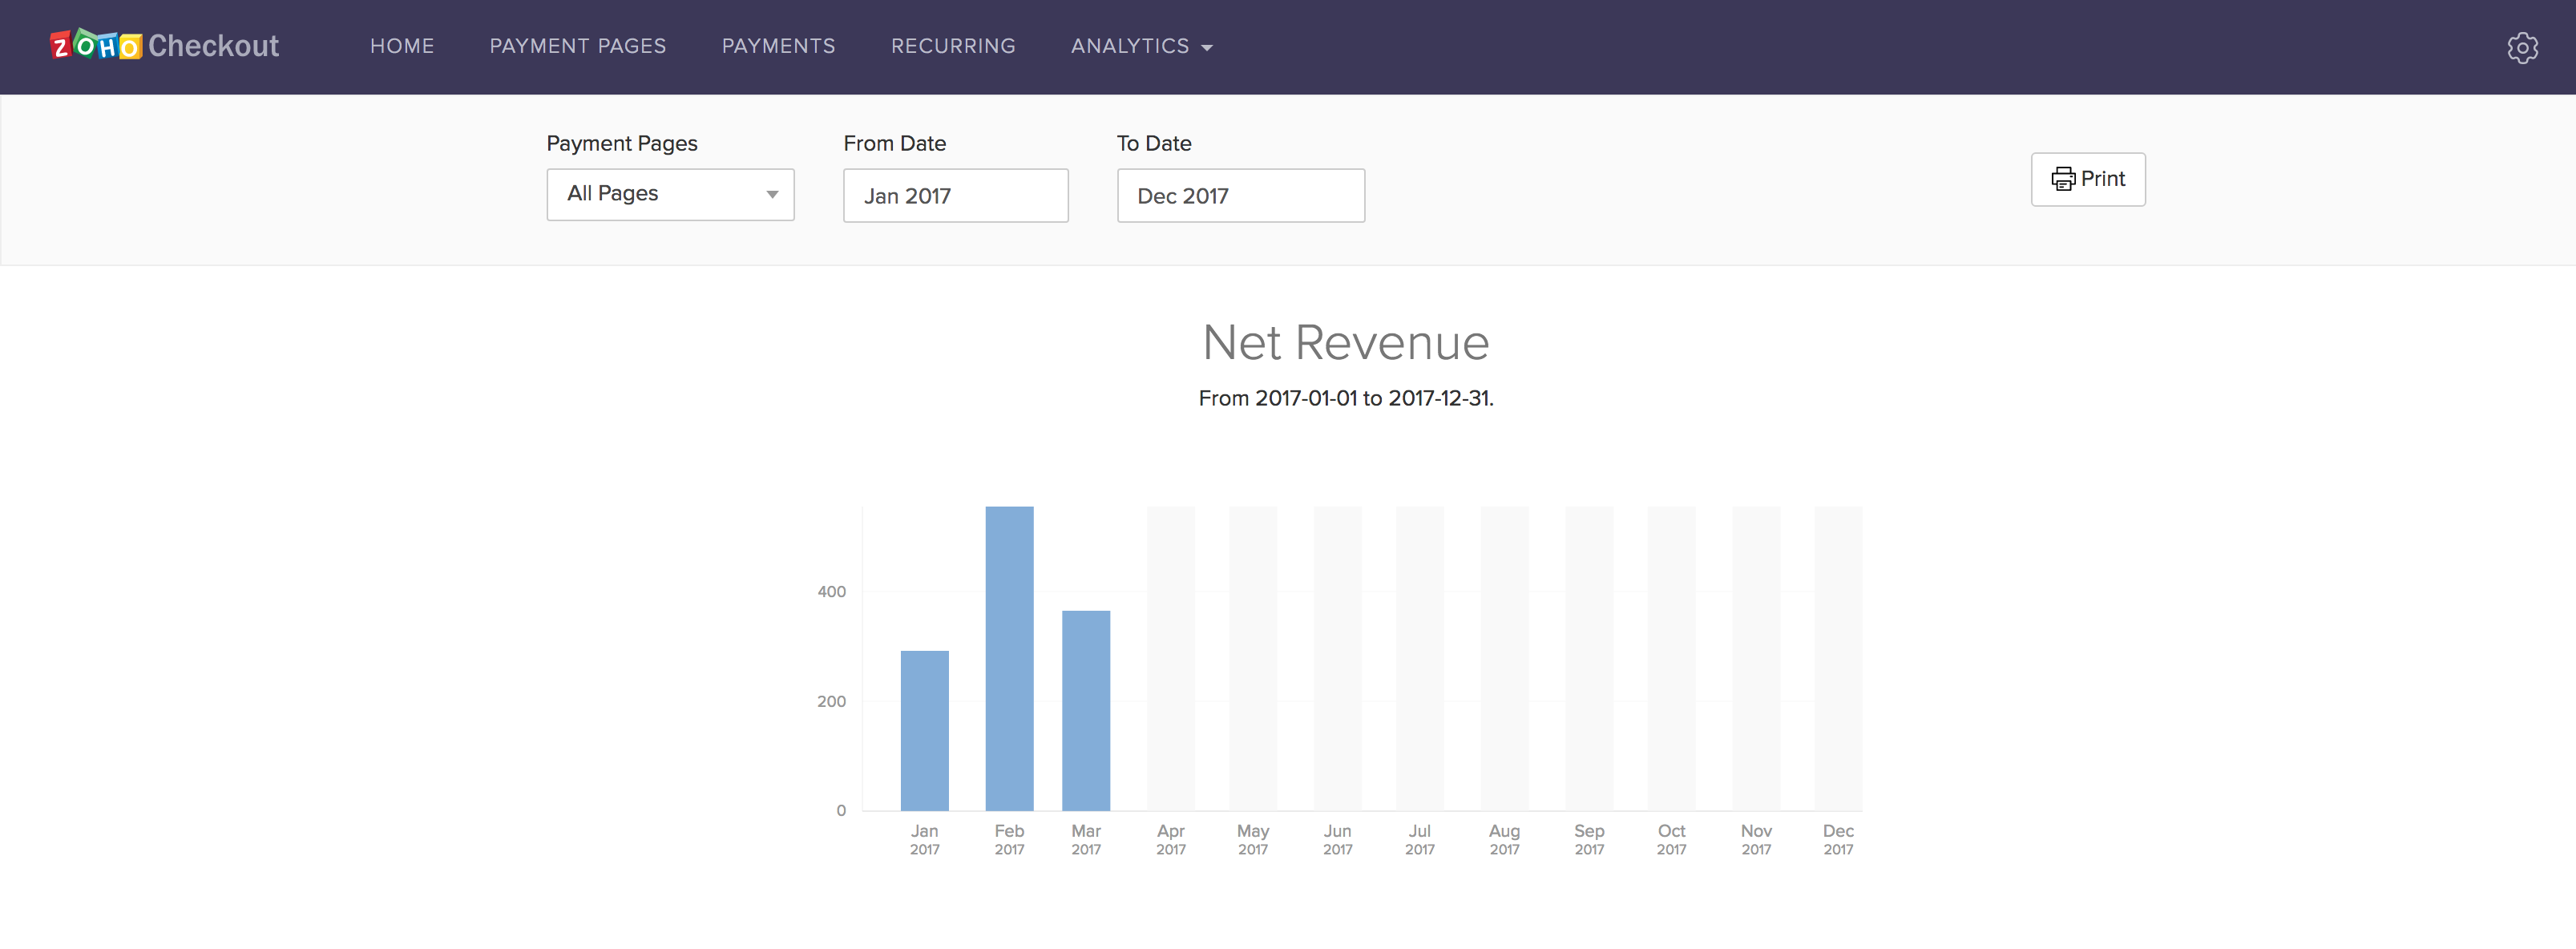 Net Revenue Image